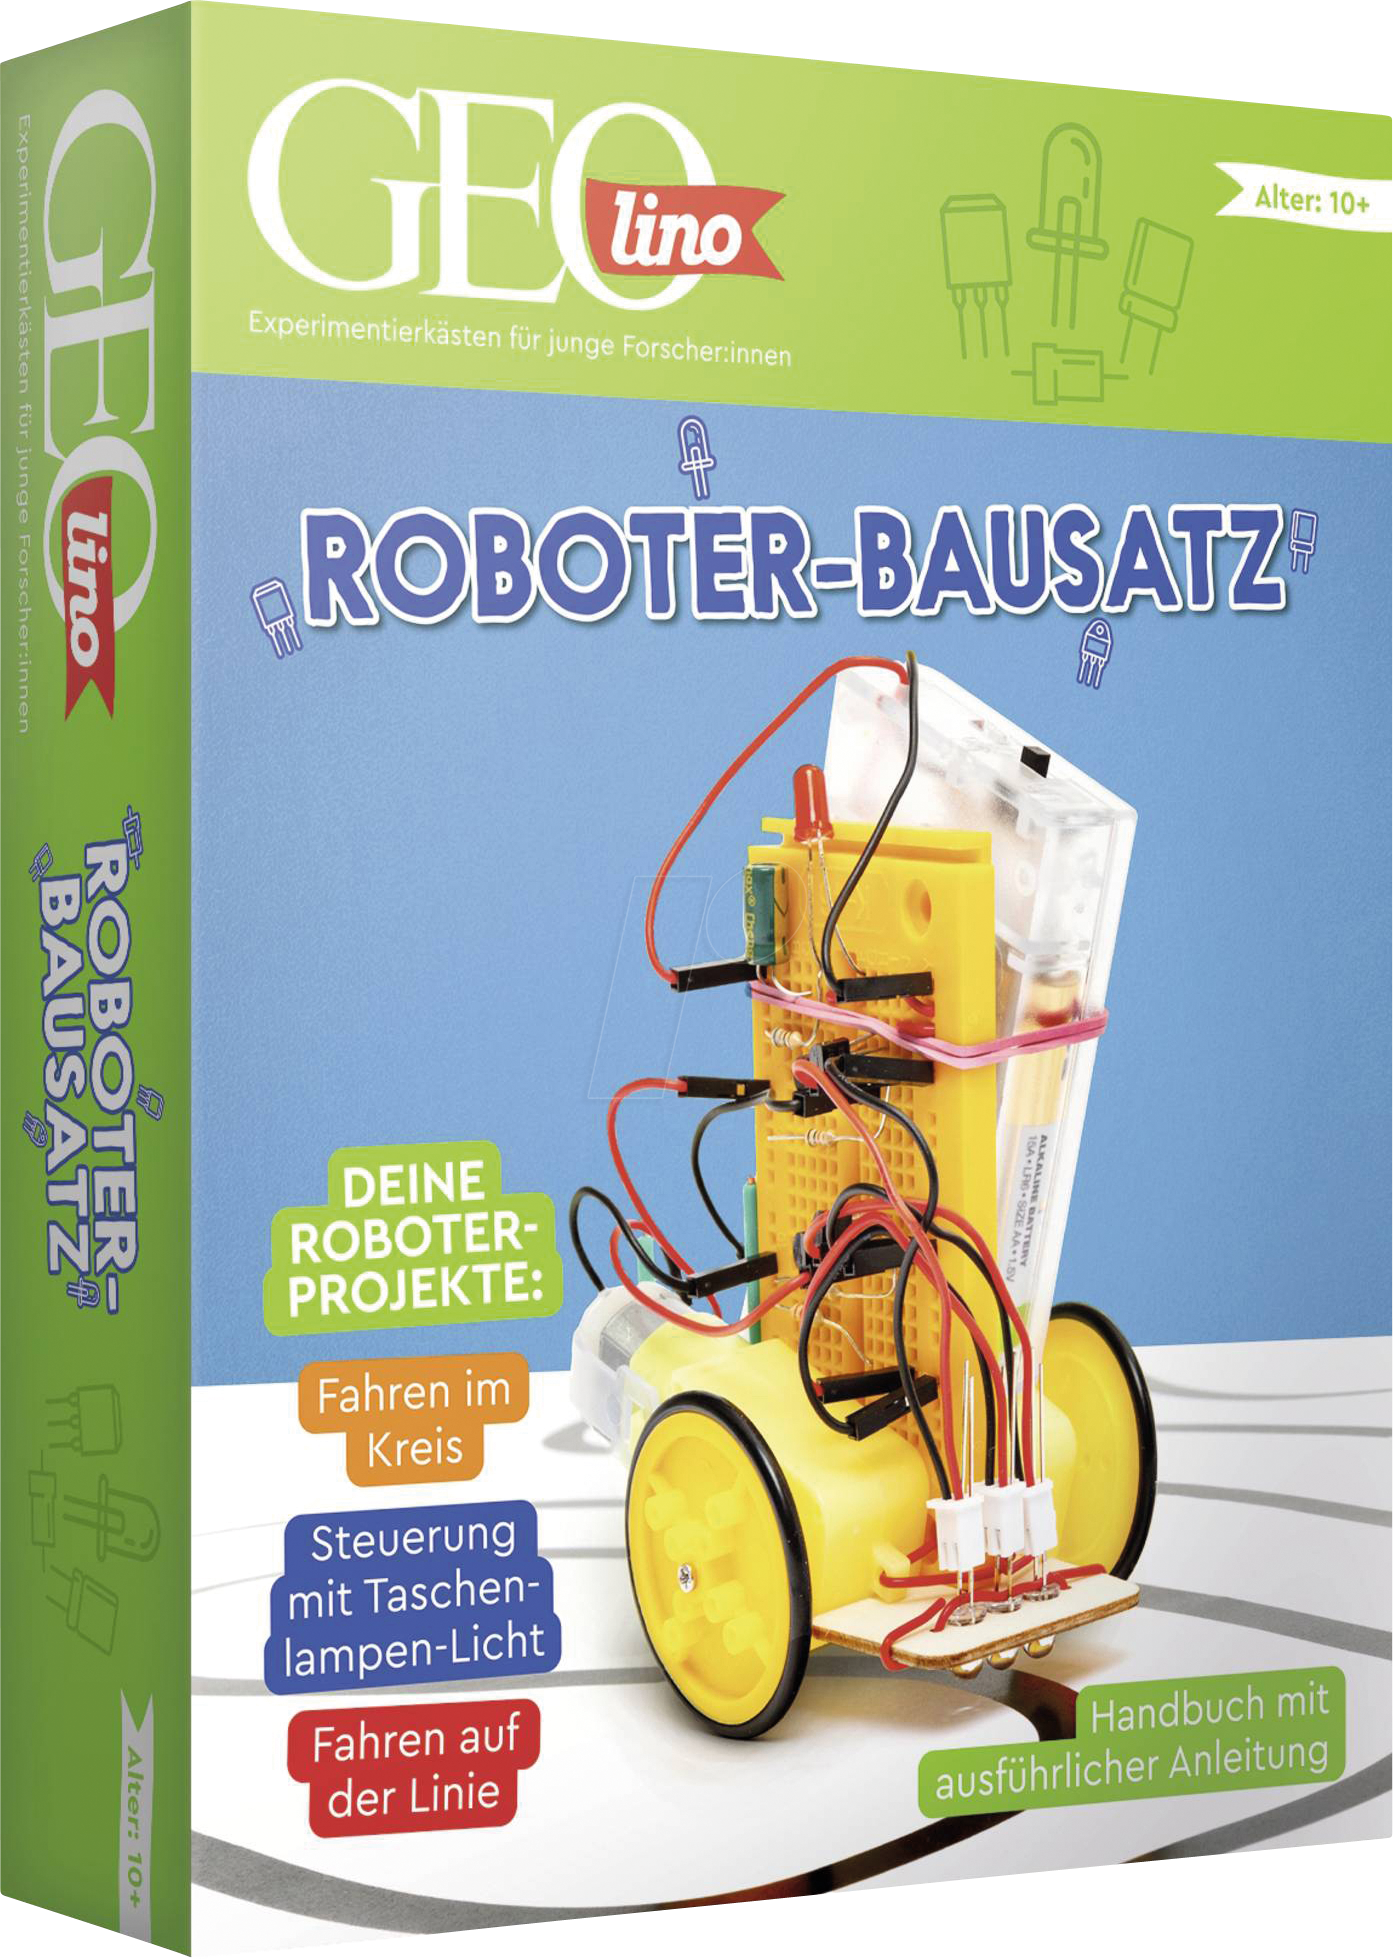 IS 9-631-67158-5 - Maker KIT GEOlino  - Roboter-Bausatz von FRANZIS-VERLAG